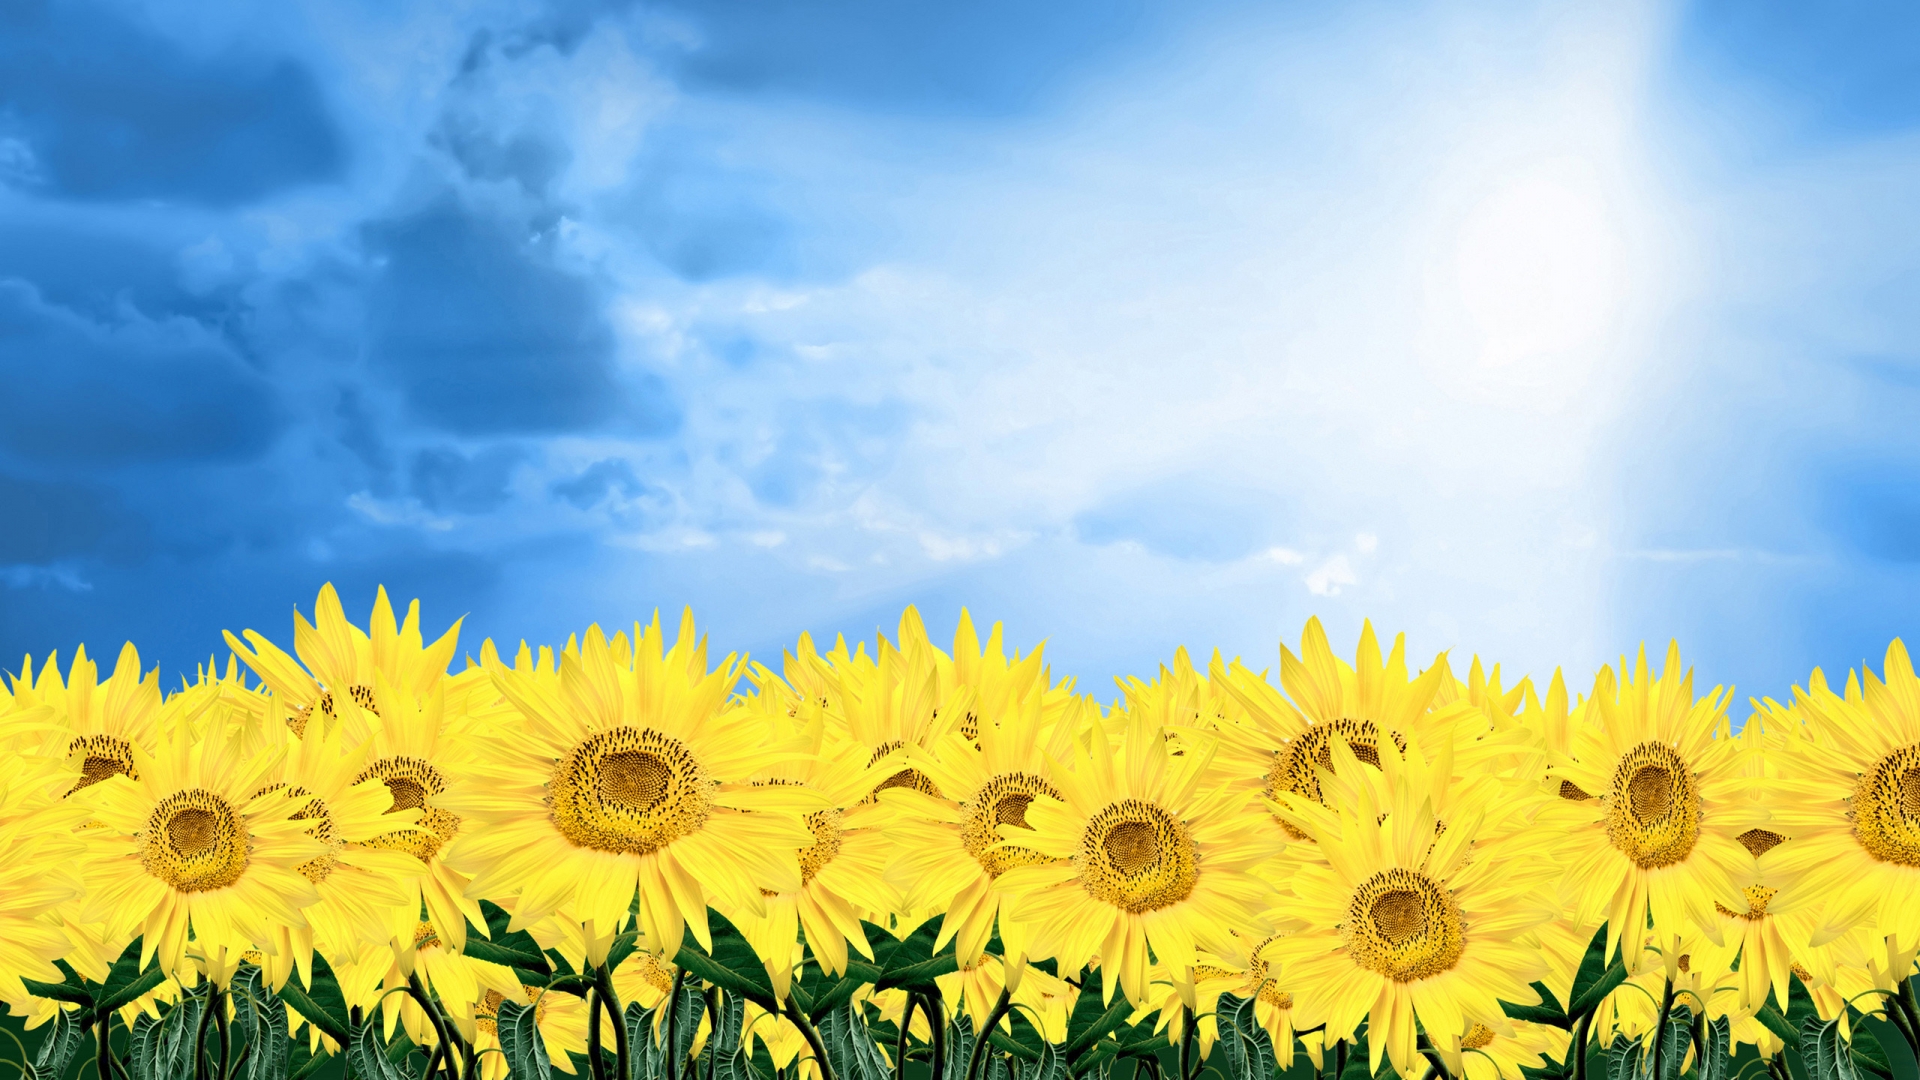 Summer Sunflowers for 1920 x 1080 HDTV 1080p resolution